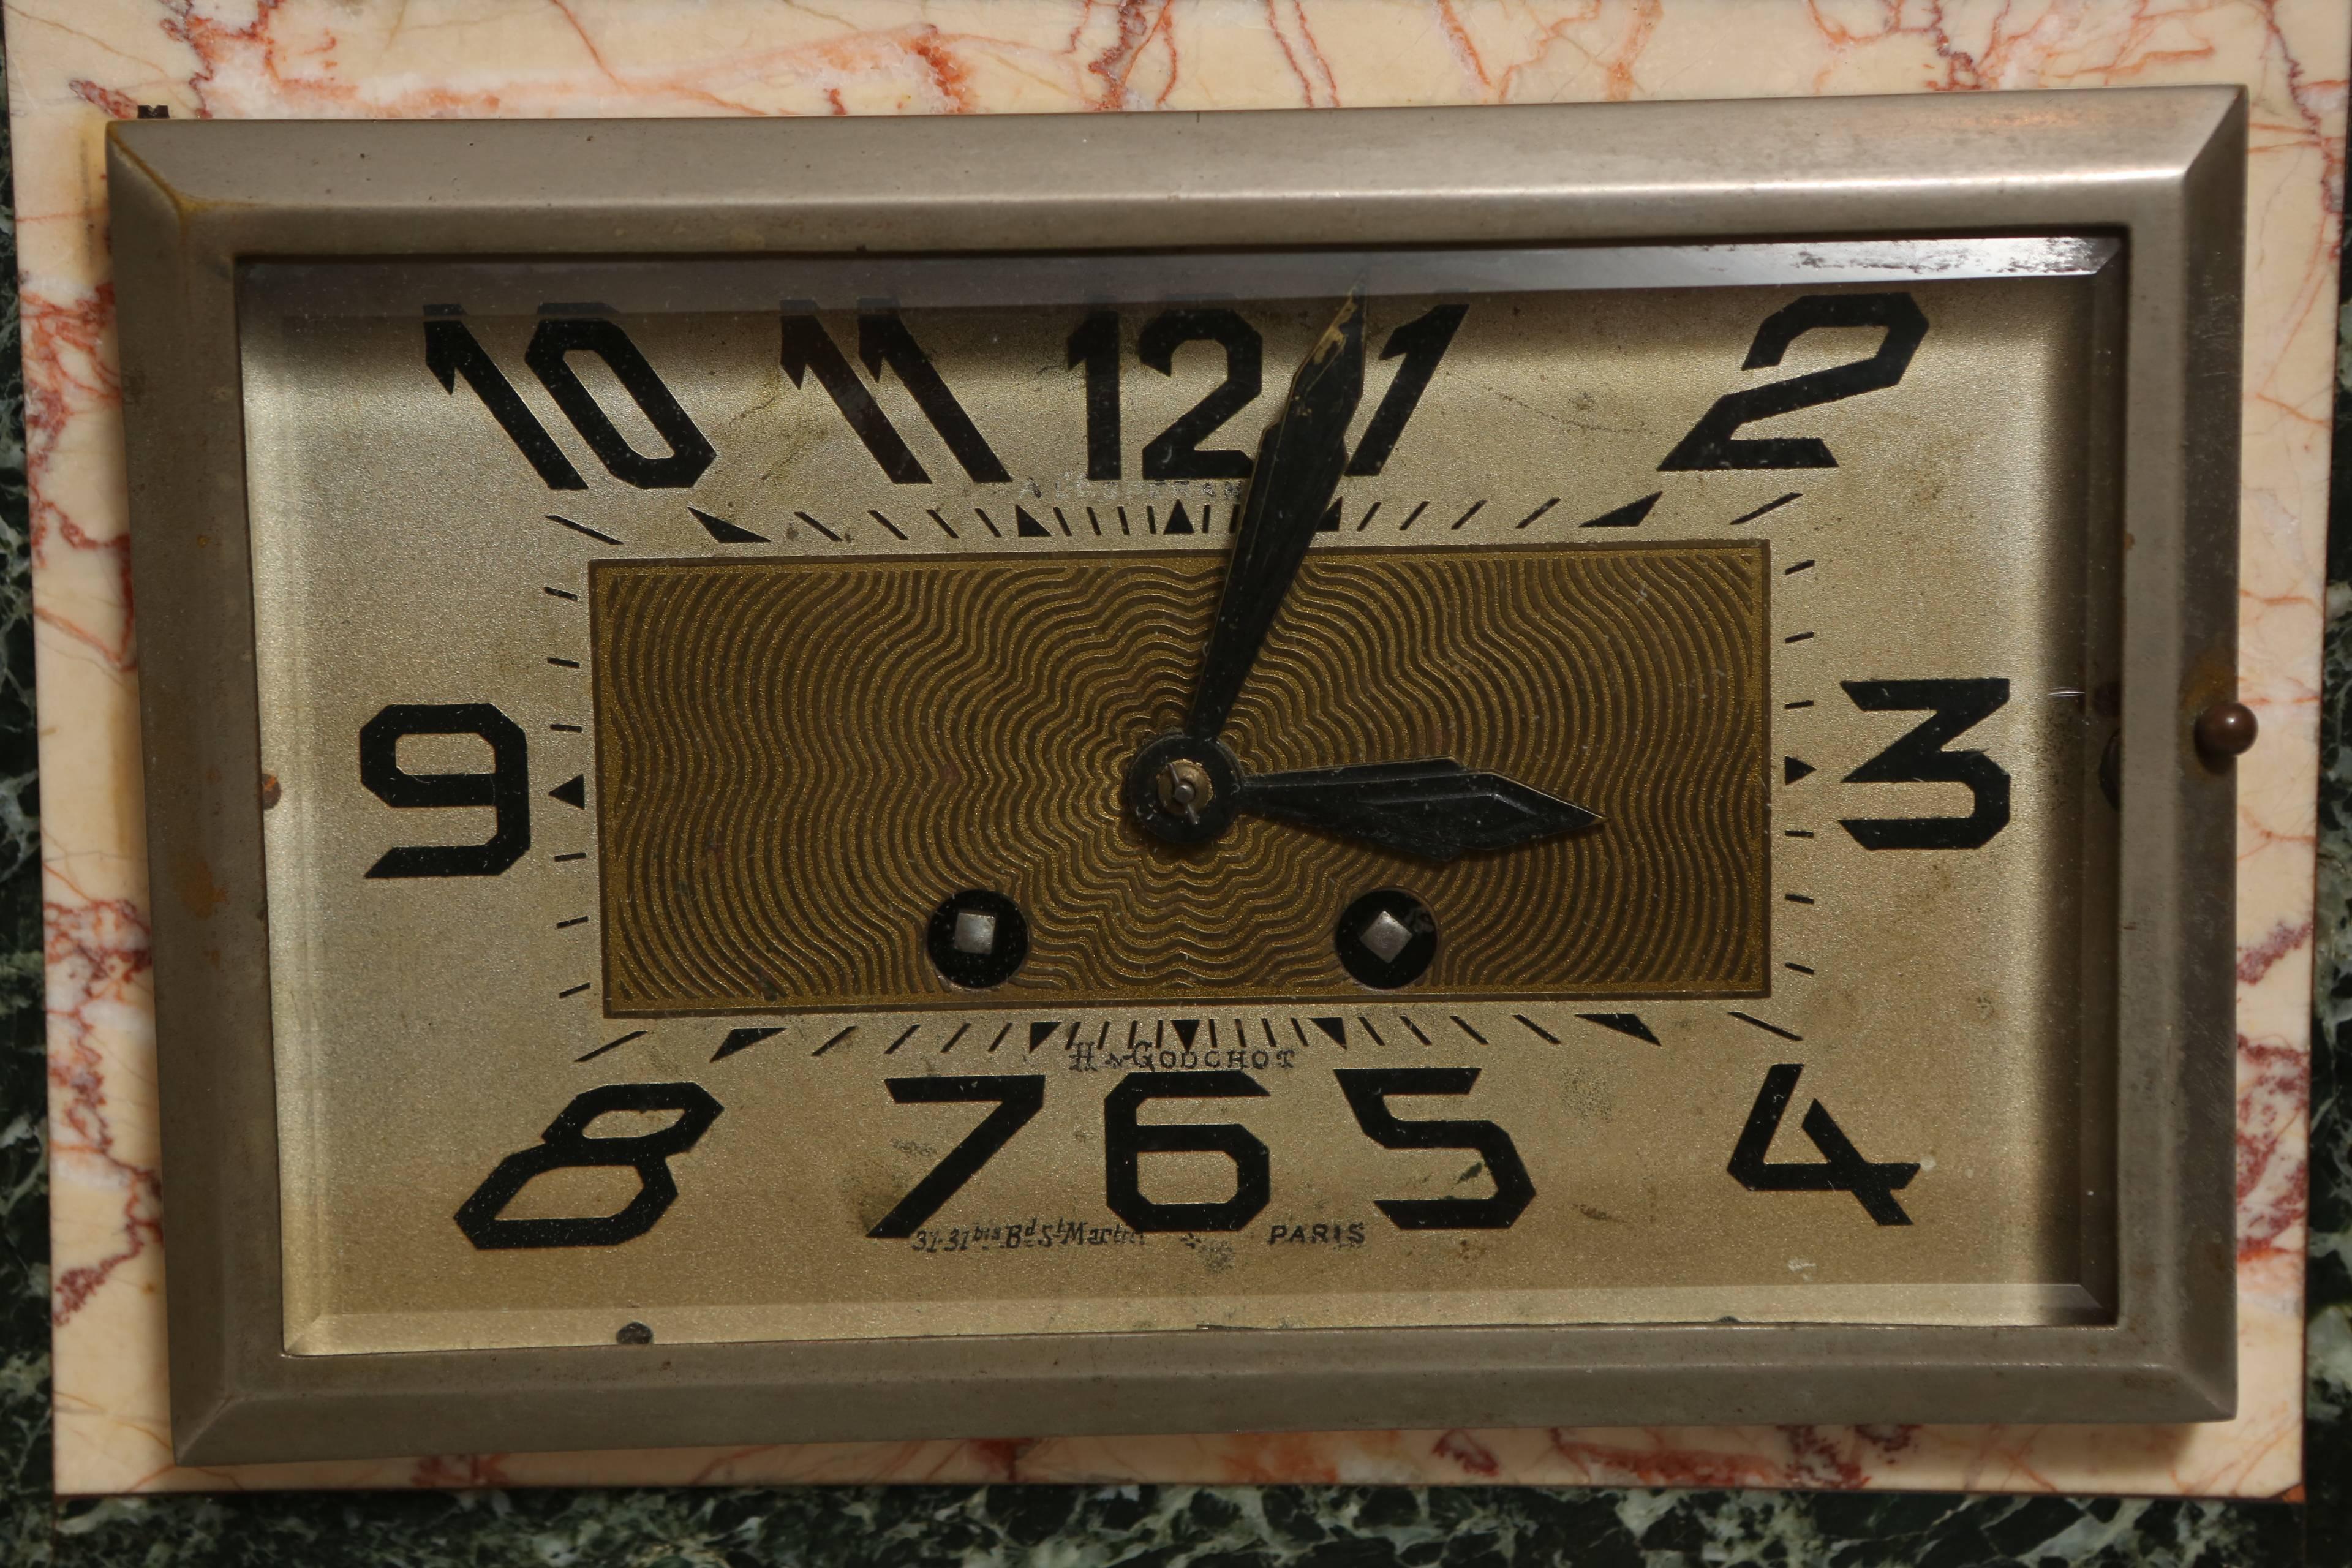 20th Century Parisian Art Deco Mantel Clock and Bookends